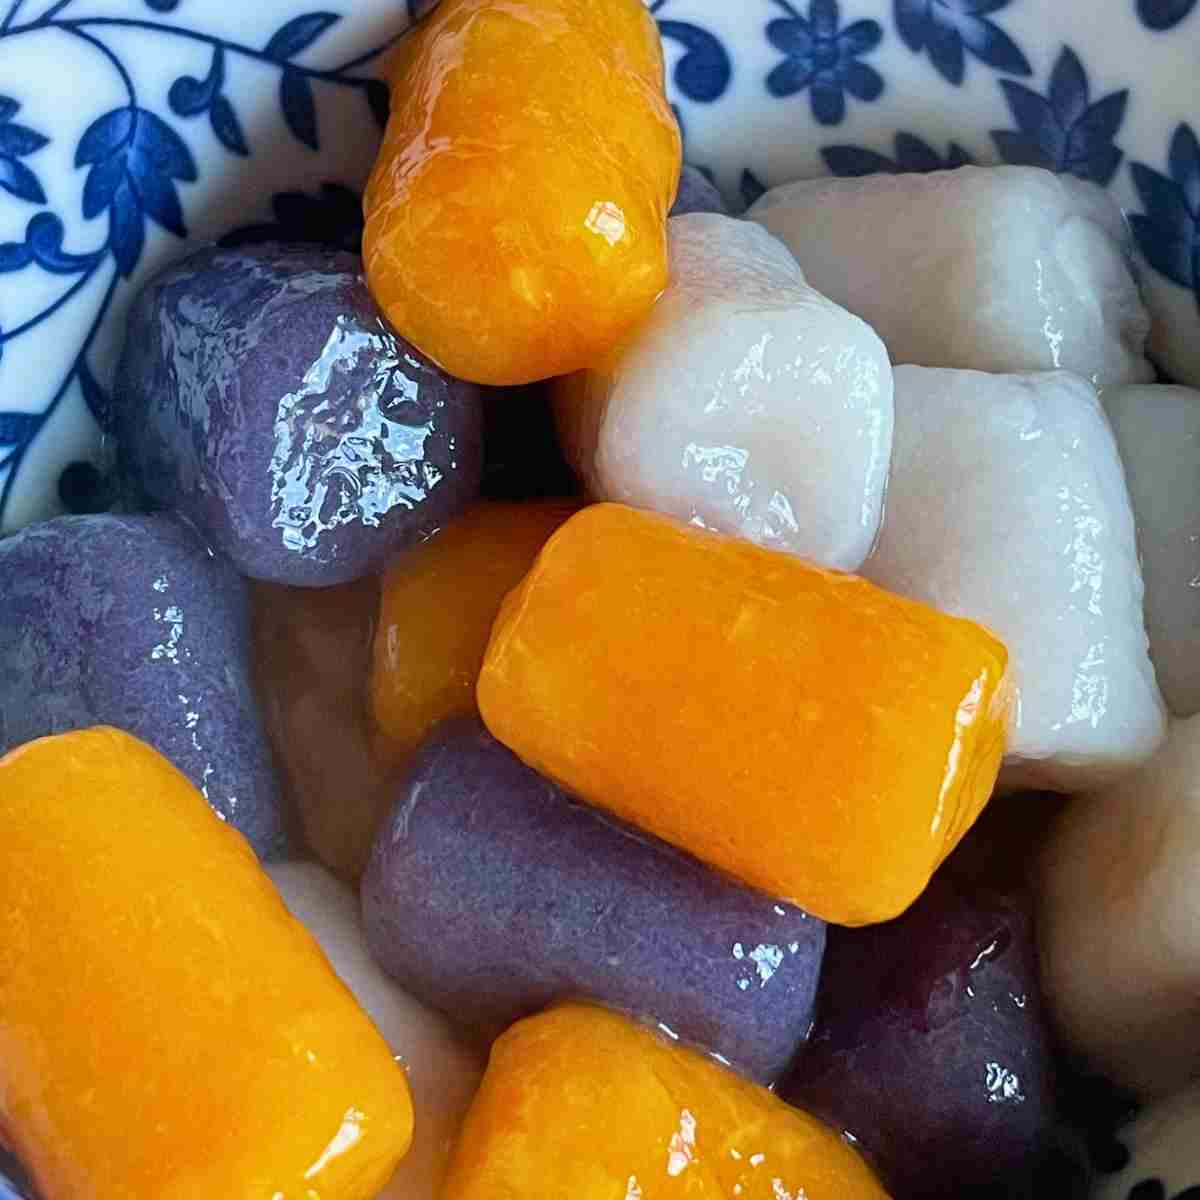 Taiwan sweet potato balls and taro